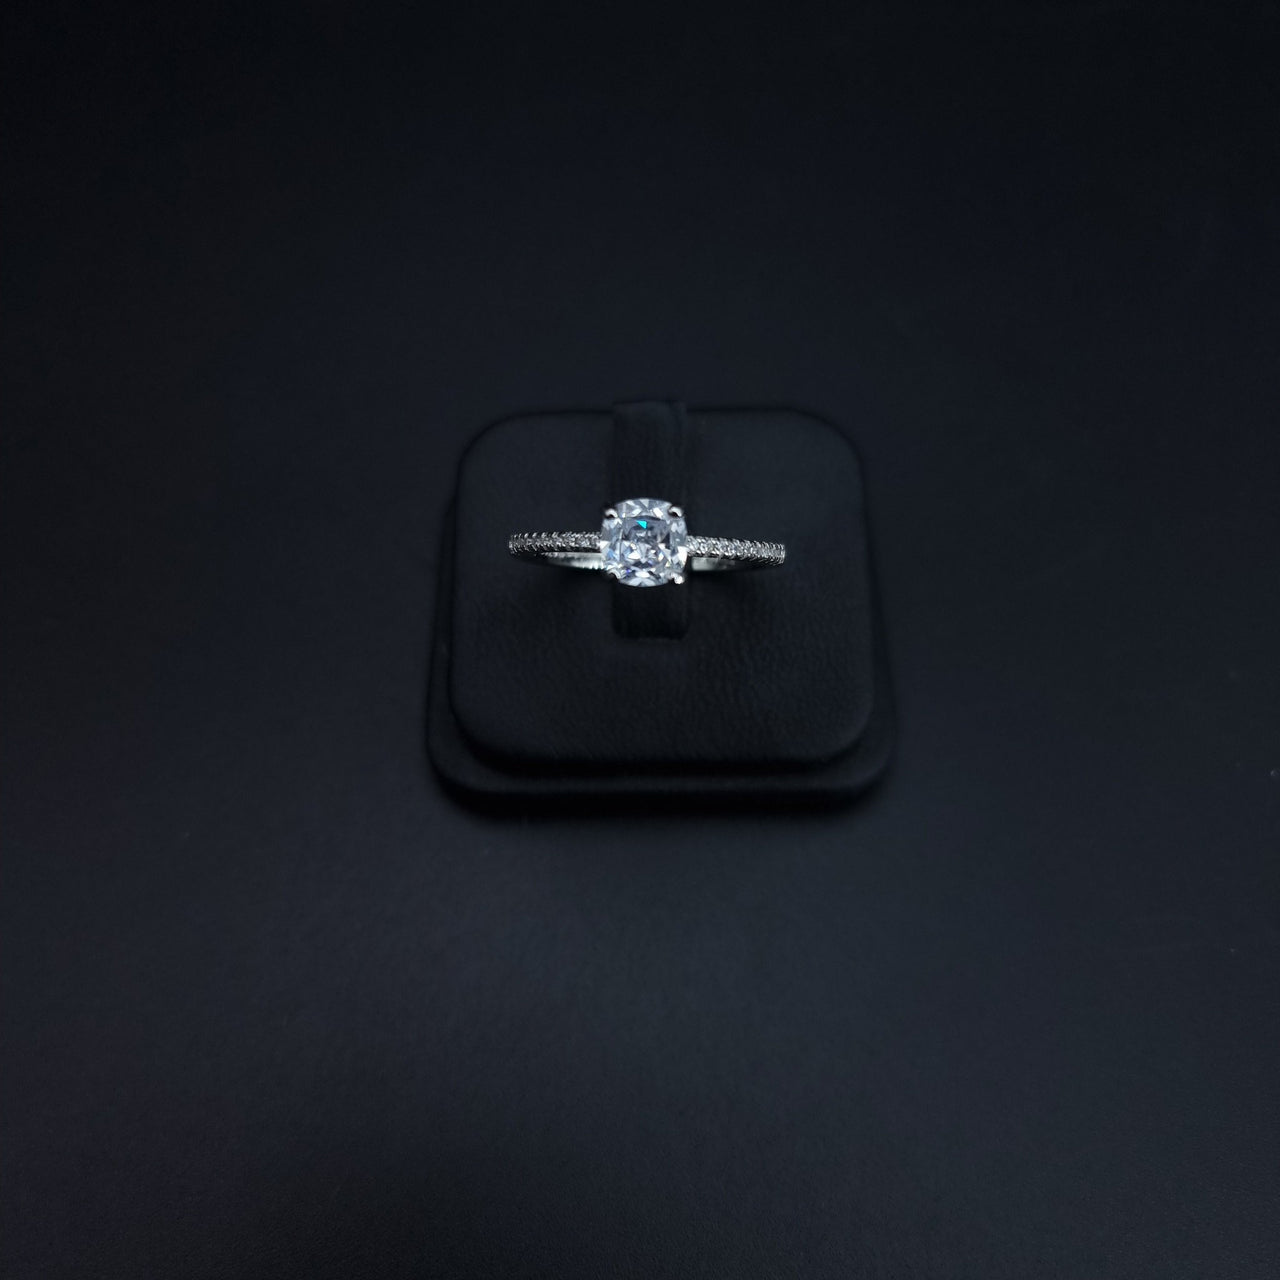 Wedding Ring With Central Zircon Stone SLPRG0147